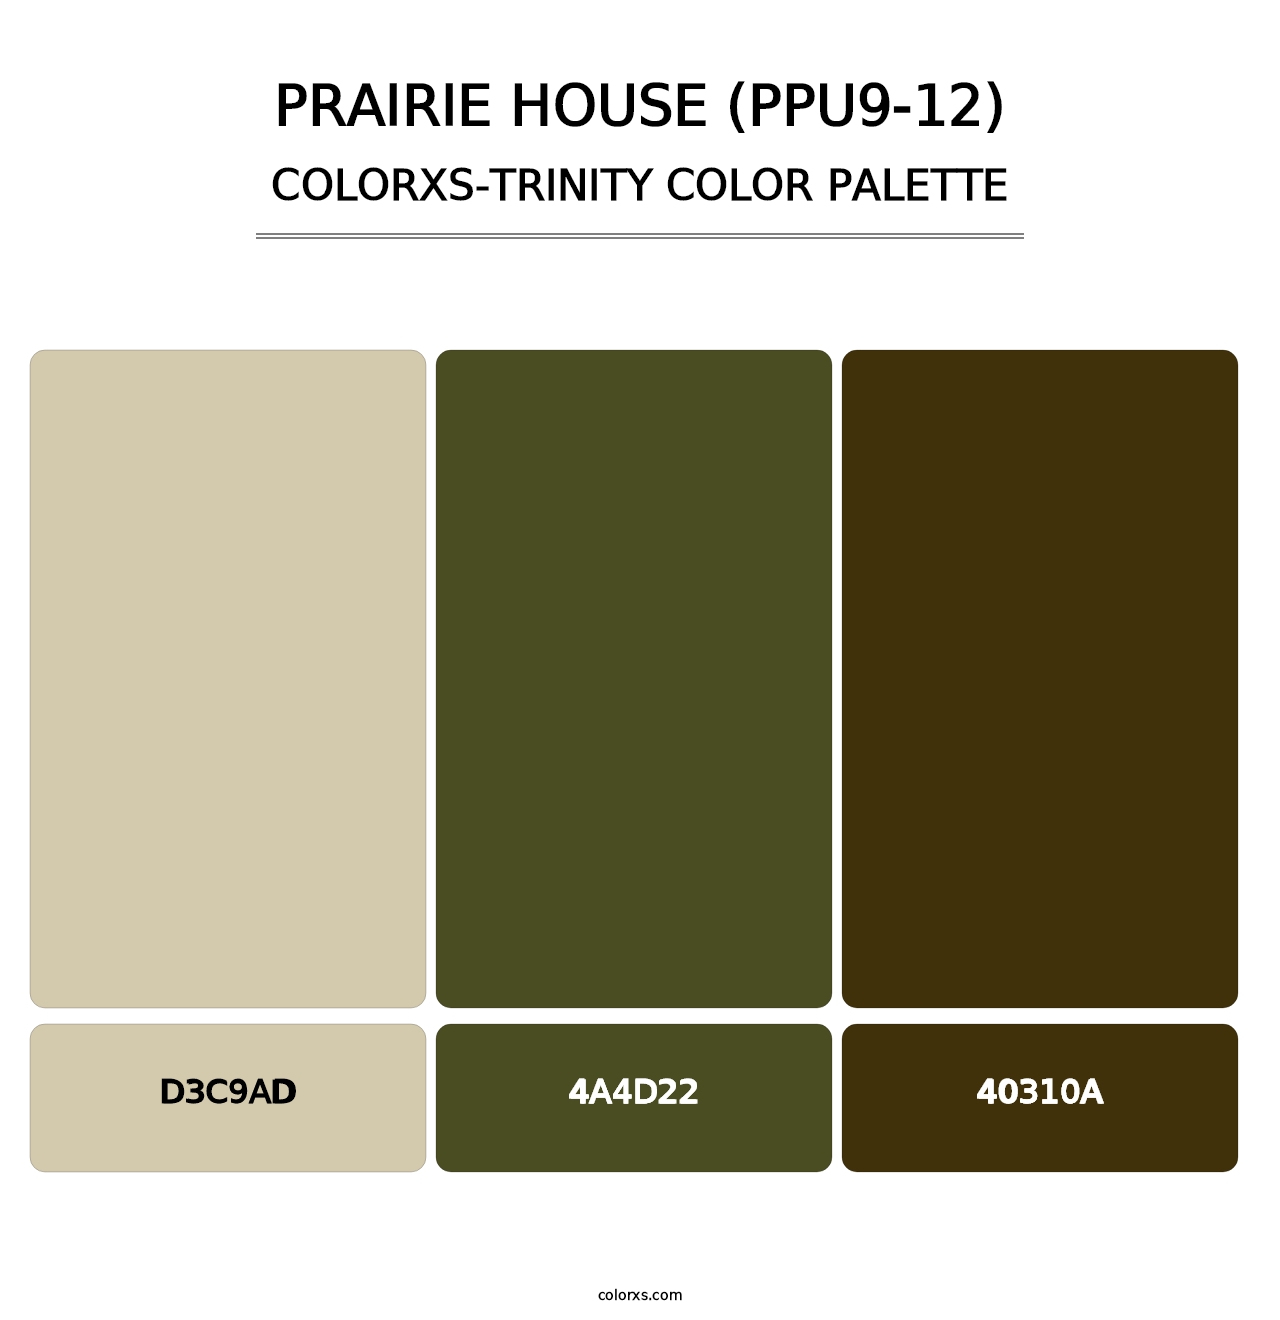 Prairie House (PPU9-12) - Colorxs Trinity Palette